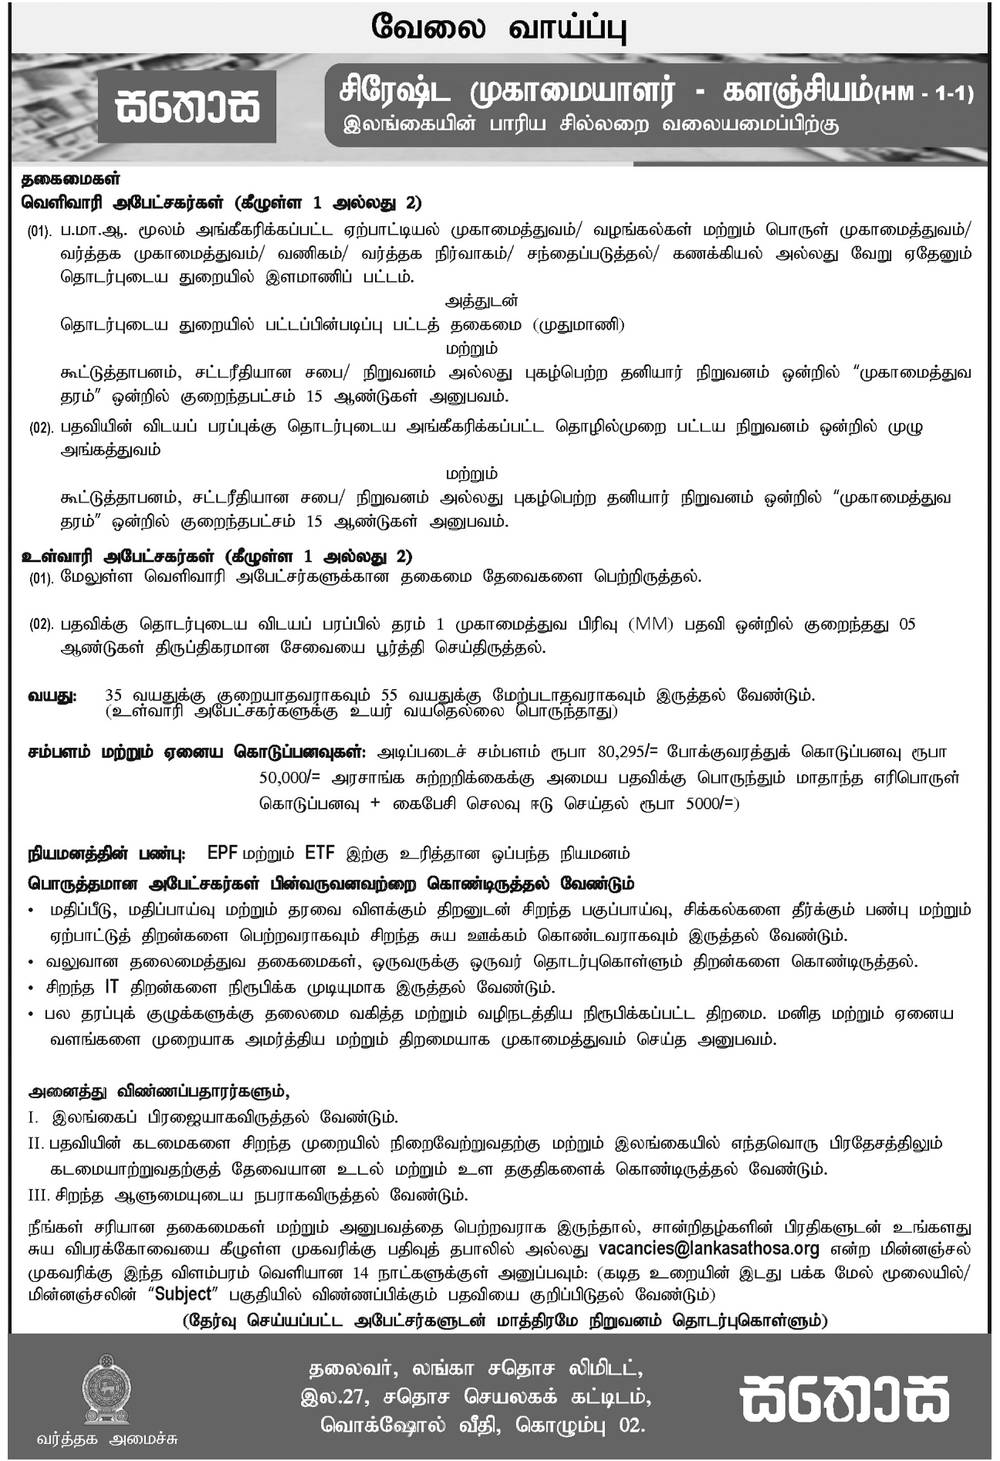 Lanka Sathosa Senior Manager Job Vacancy Details Tamil